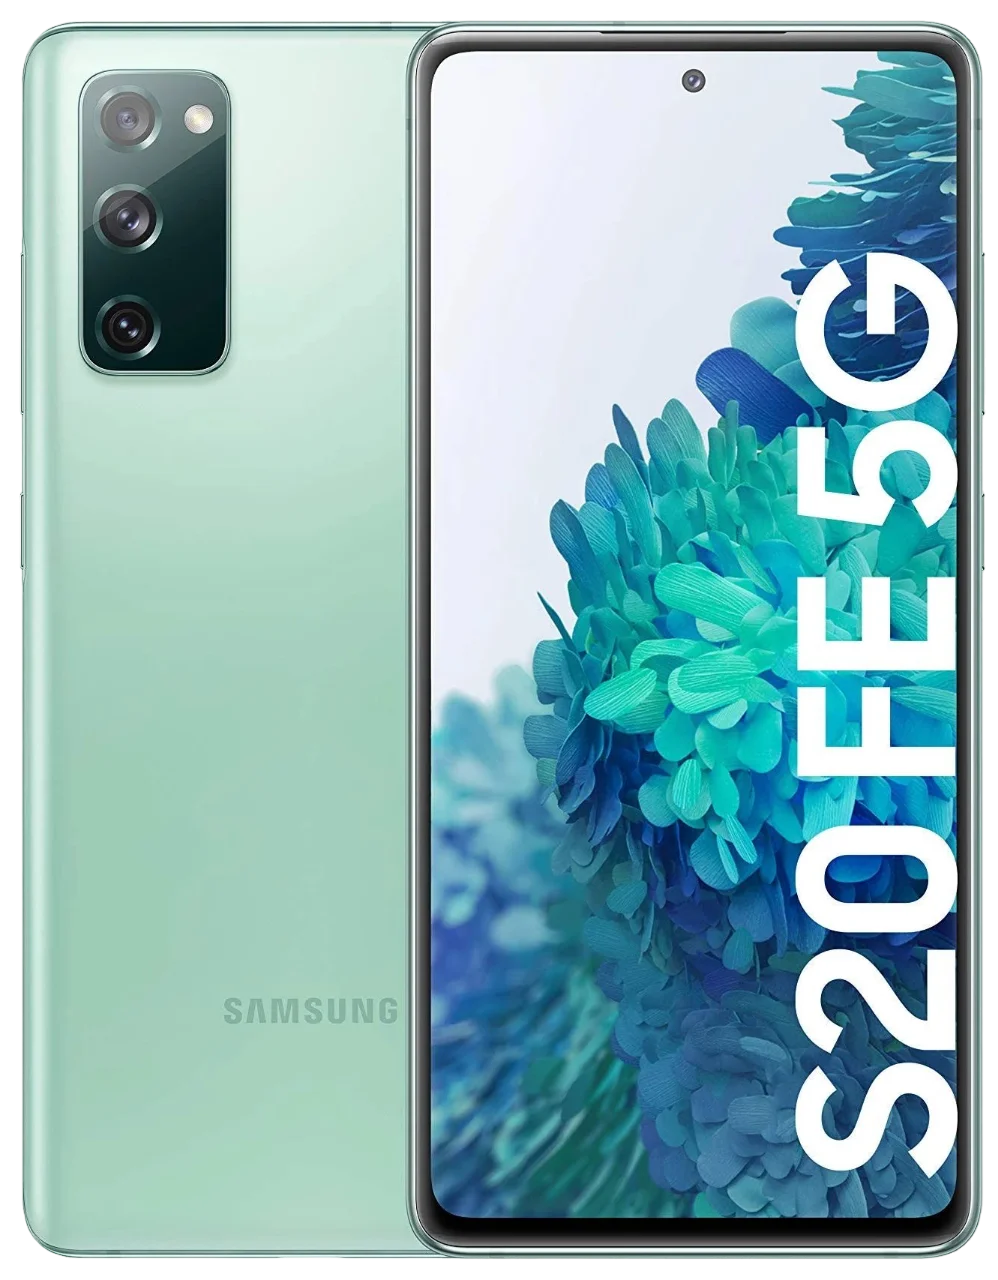 Samsung Galaxy S20 FE 5G image